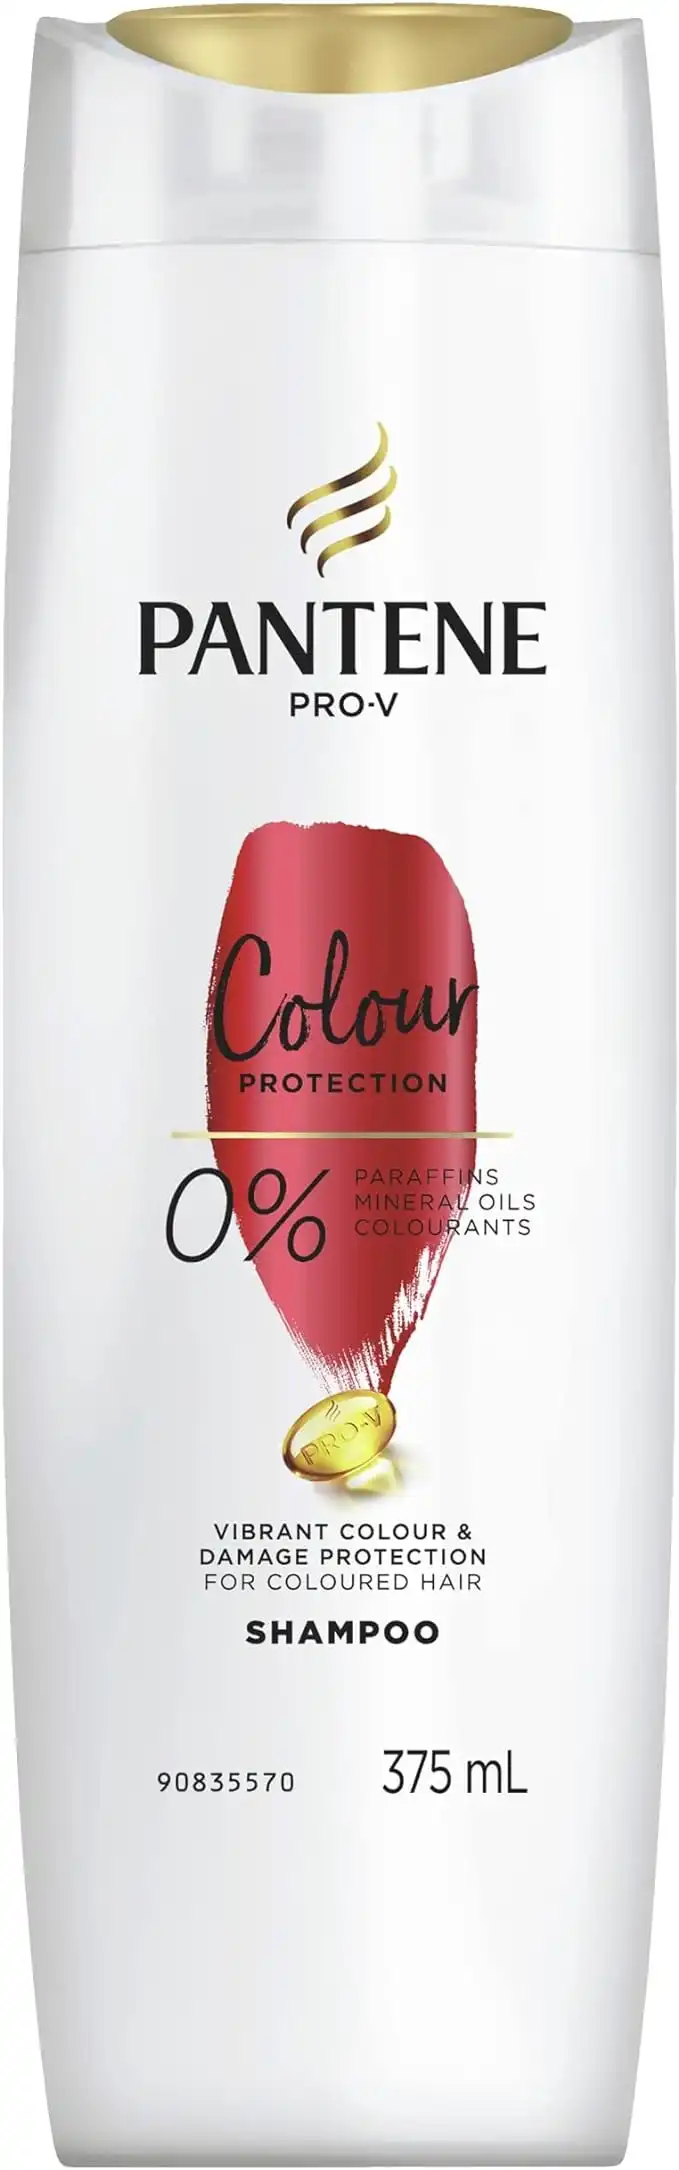 Pantene Colour Protect Shampoo 375ml